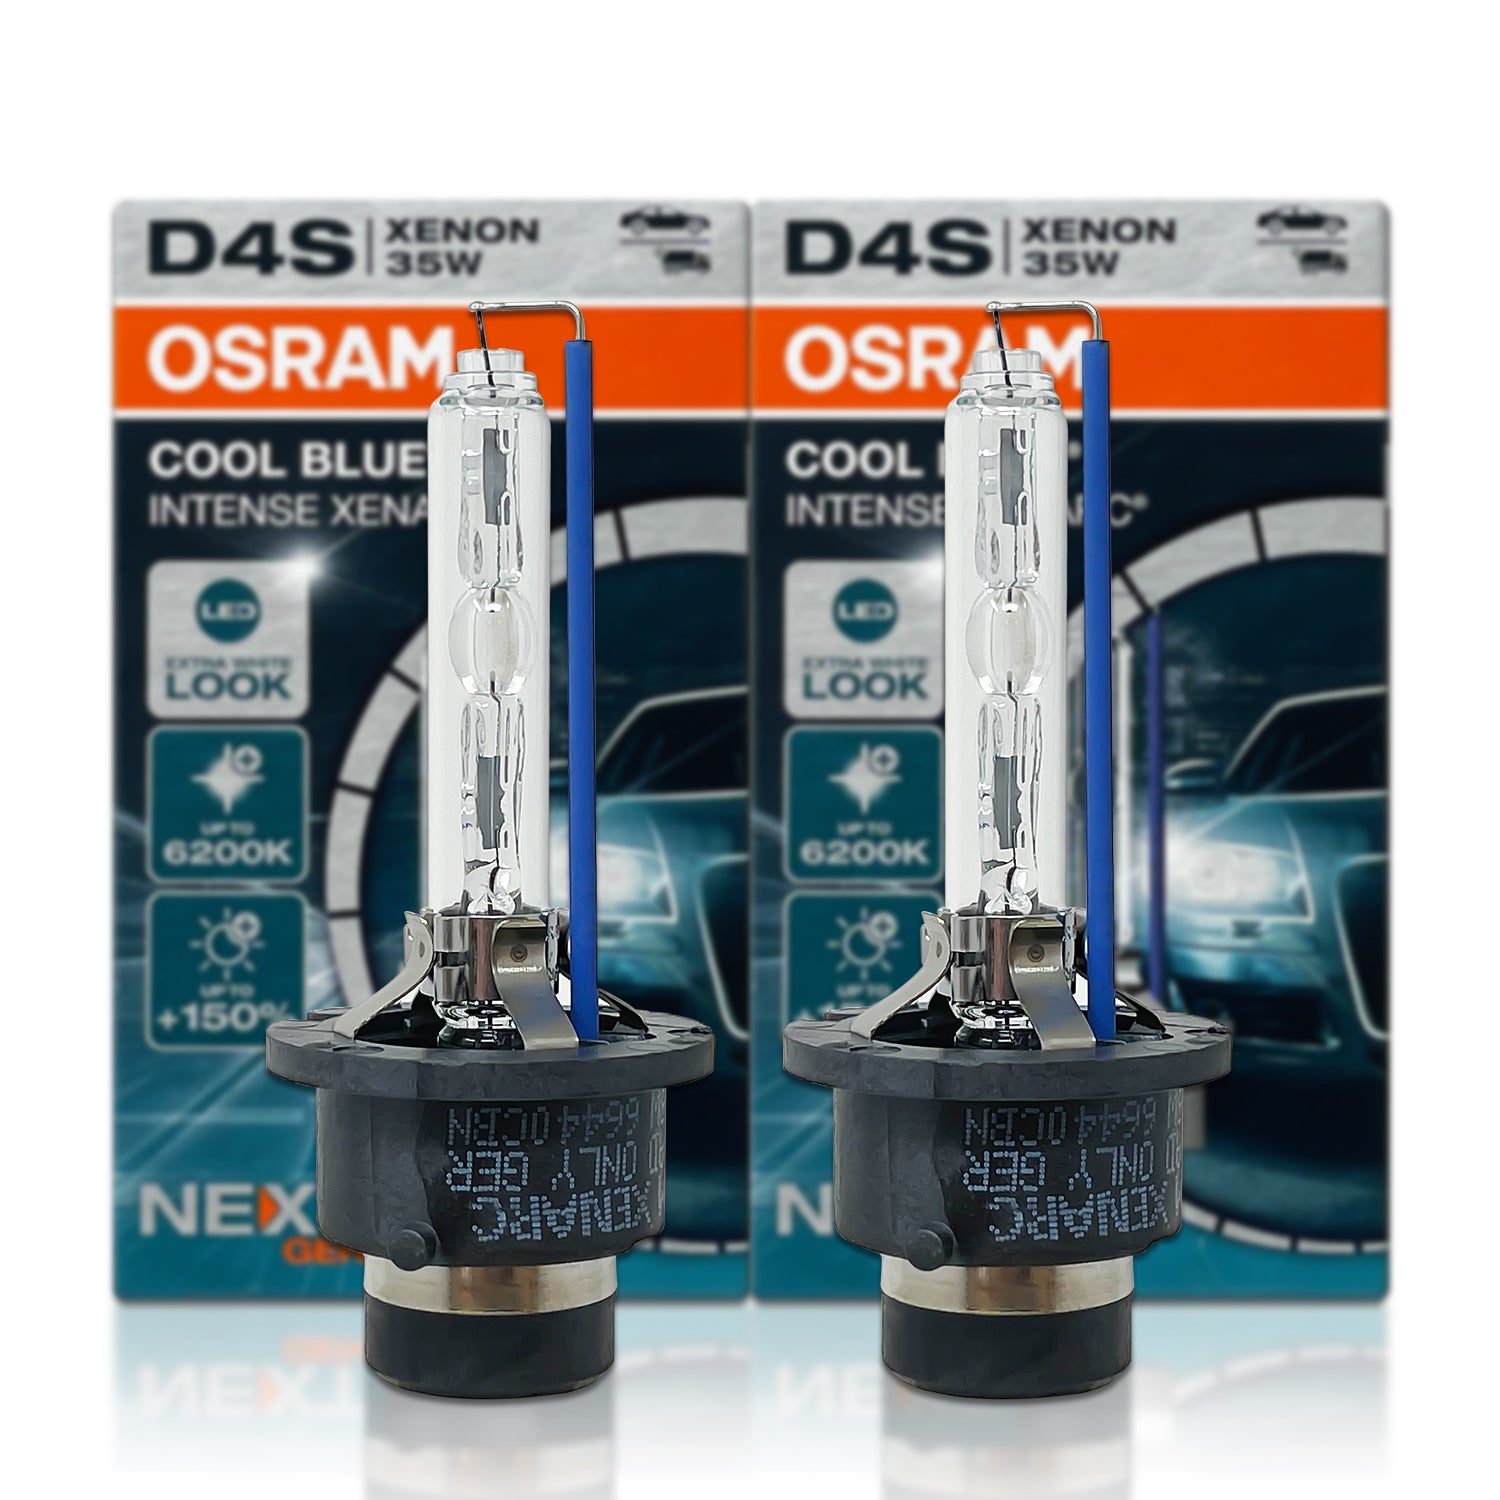 D2S OSRAM Cool Blue Intense Xenarc Next Gen 35W 6200K Xenon HID Bulbs (Pair)